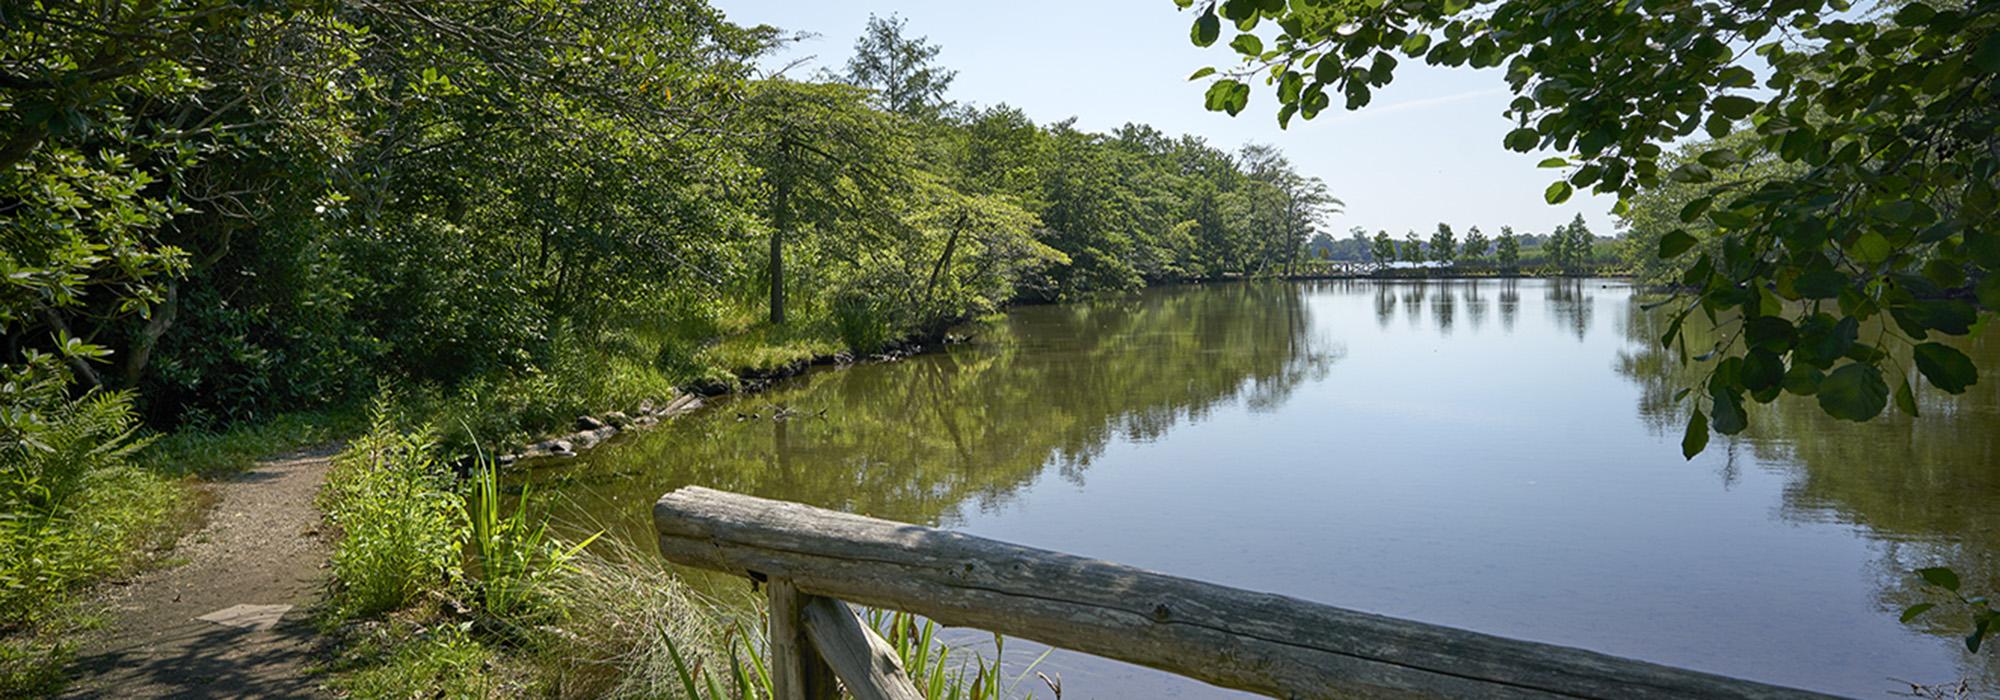 Bayard Cutting Arboretum State Park, Great River, NY